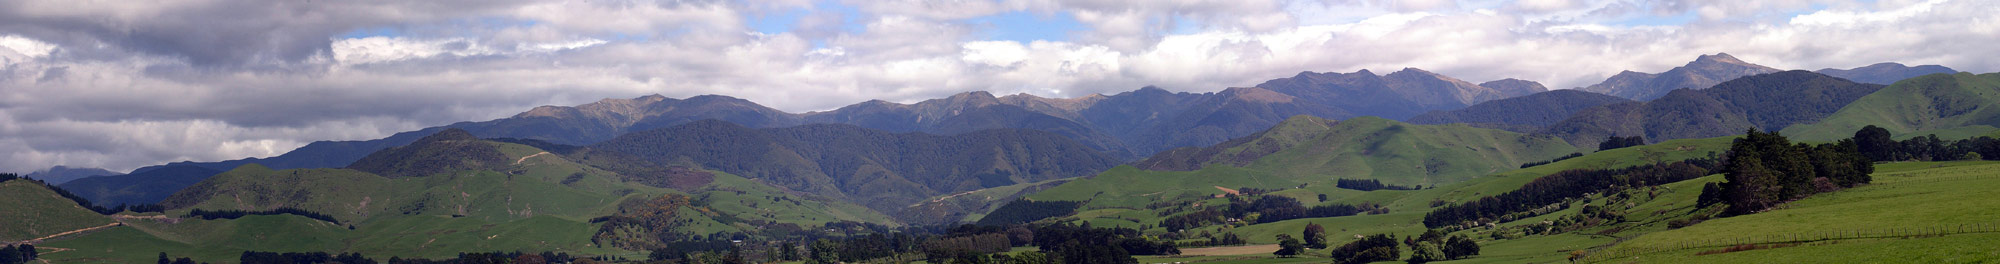 Tararua Ranges Panorama View